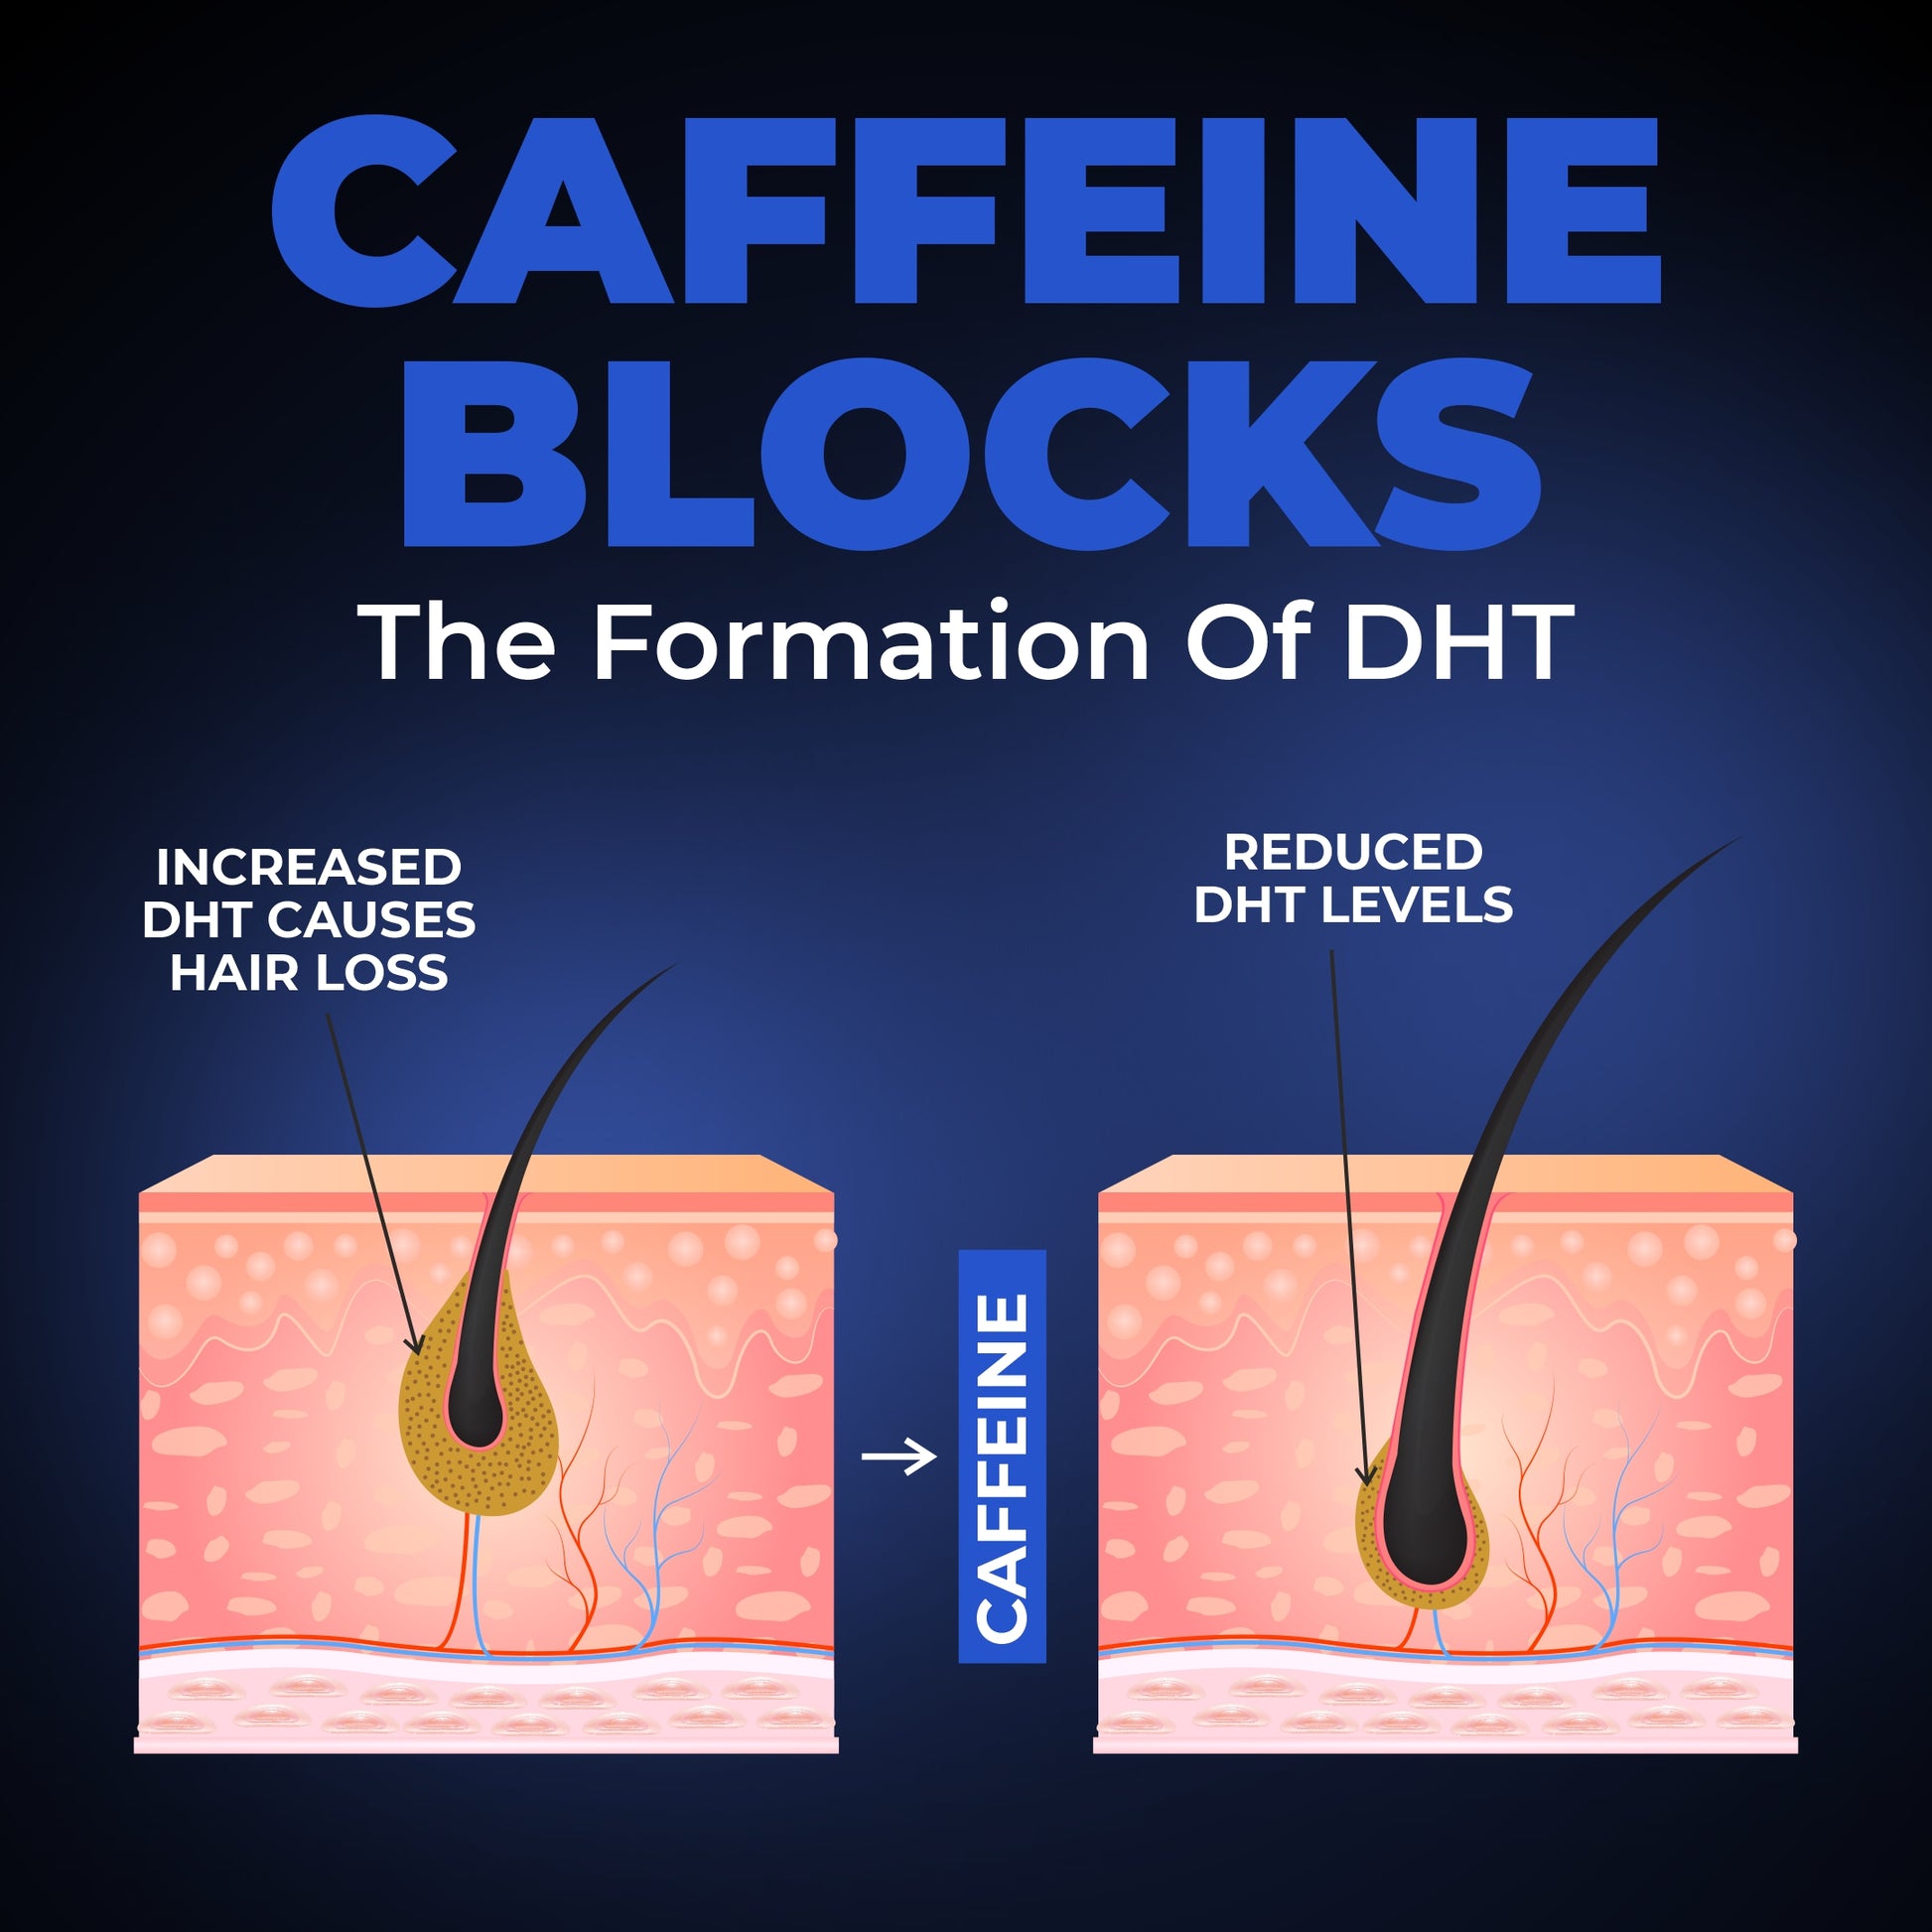 caffeine reduces dht levels